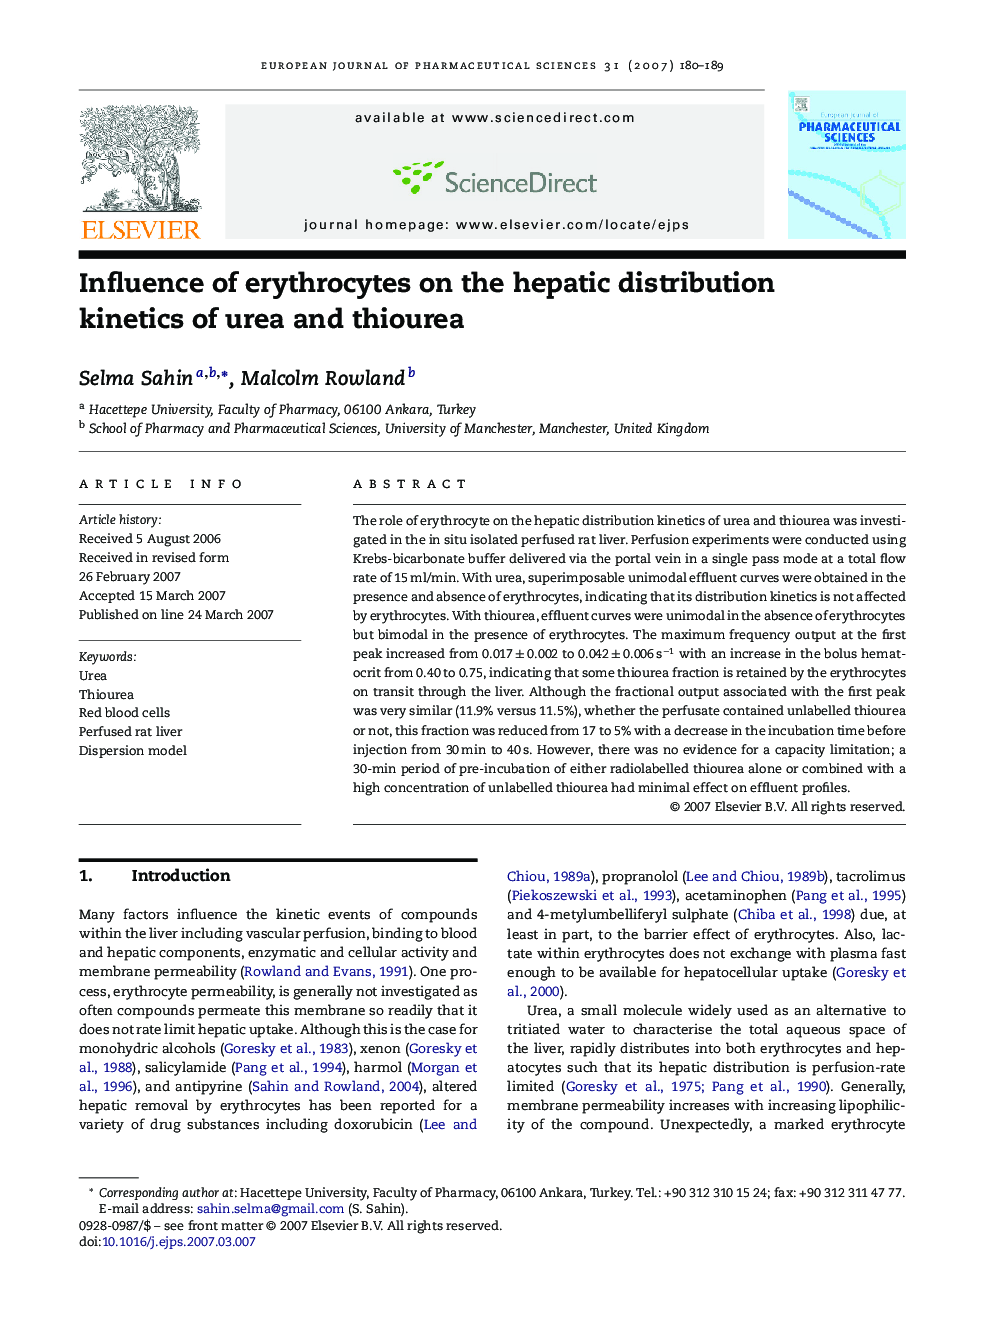 Influence of erythrocytes on the hepatic distribution kinetics of urea and thiourea